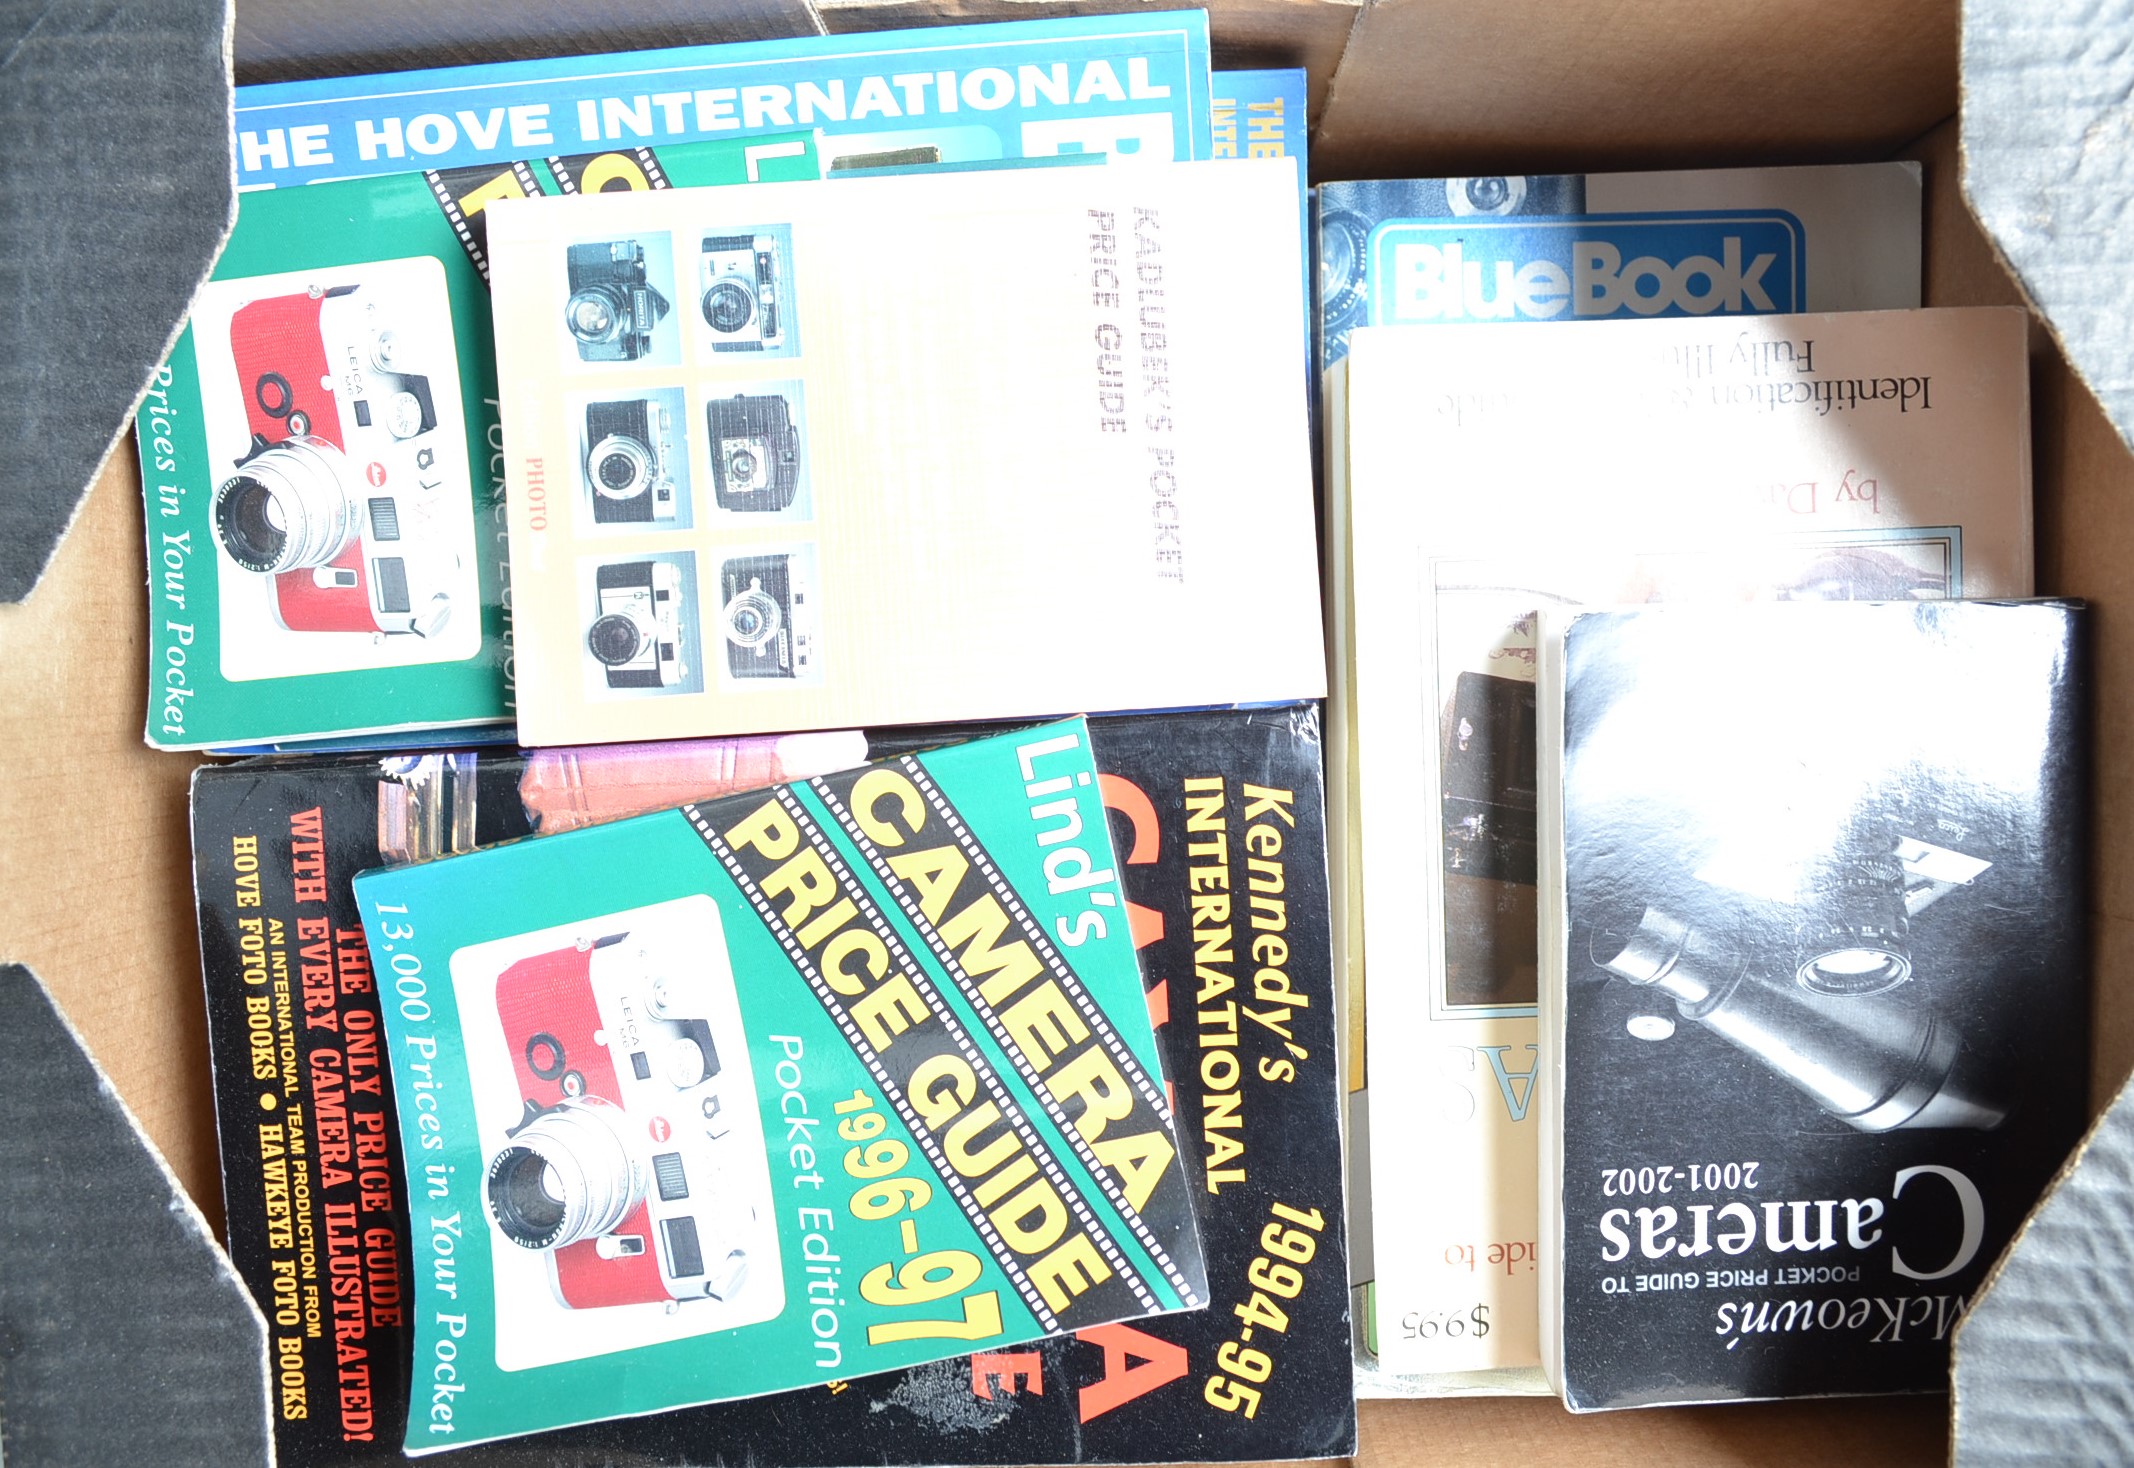 Photographic Price Guide Books, including McKeown's Price Guide to Antique Cameras, Blue Books,